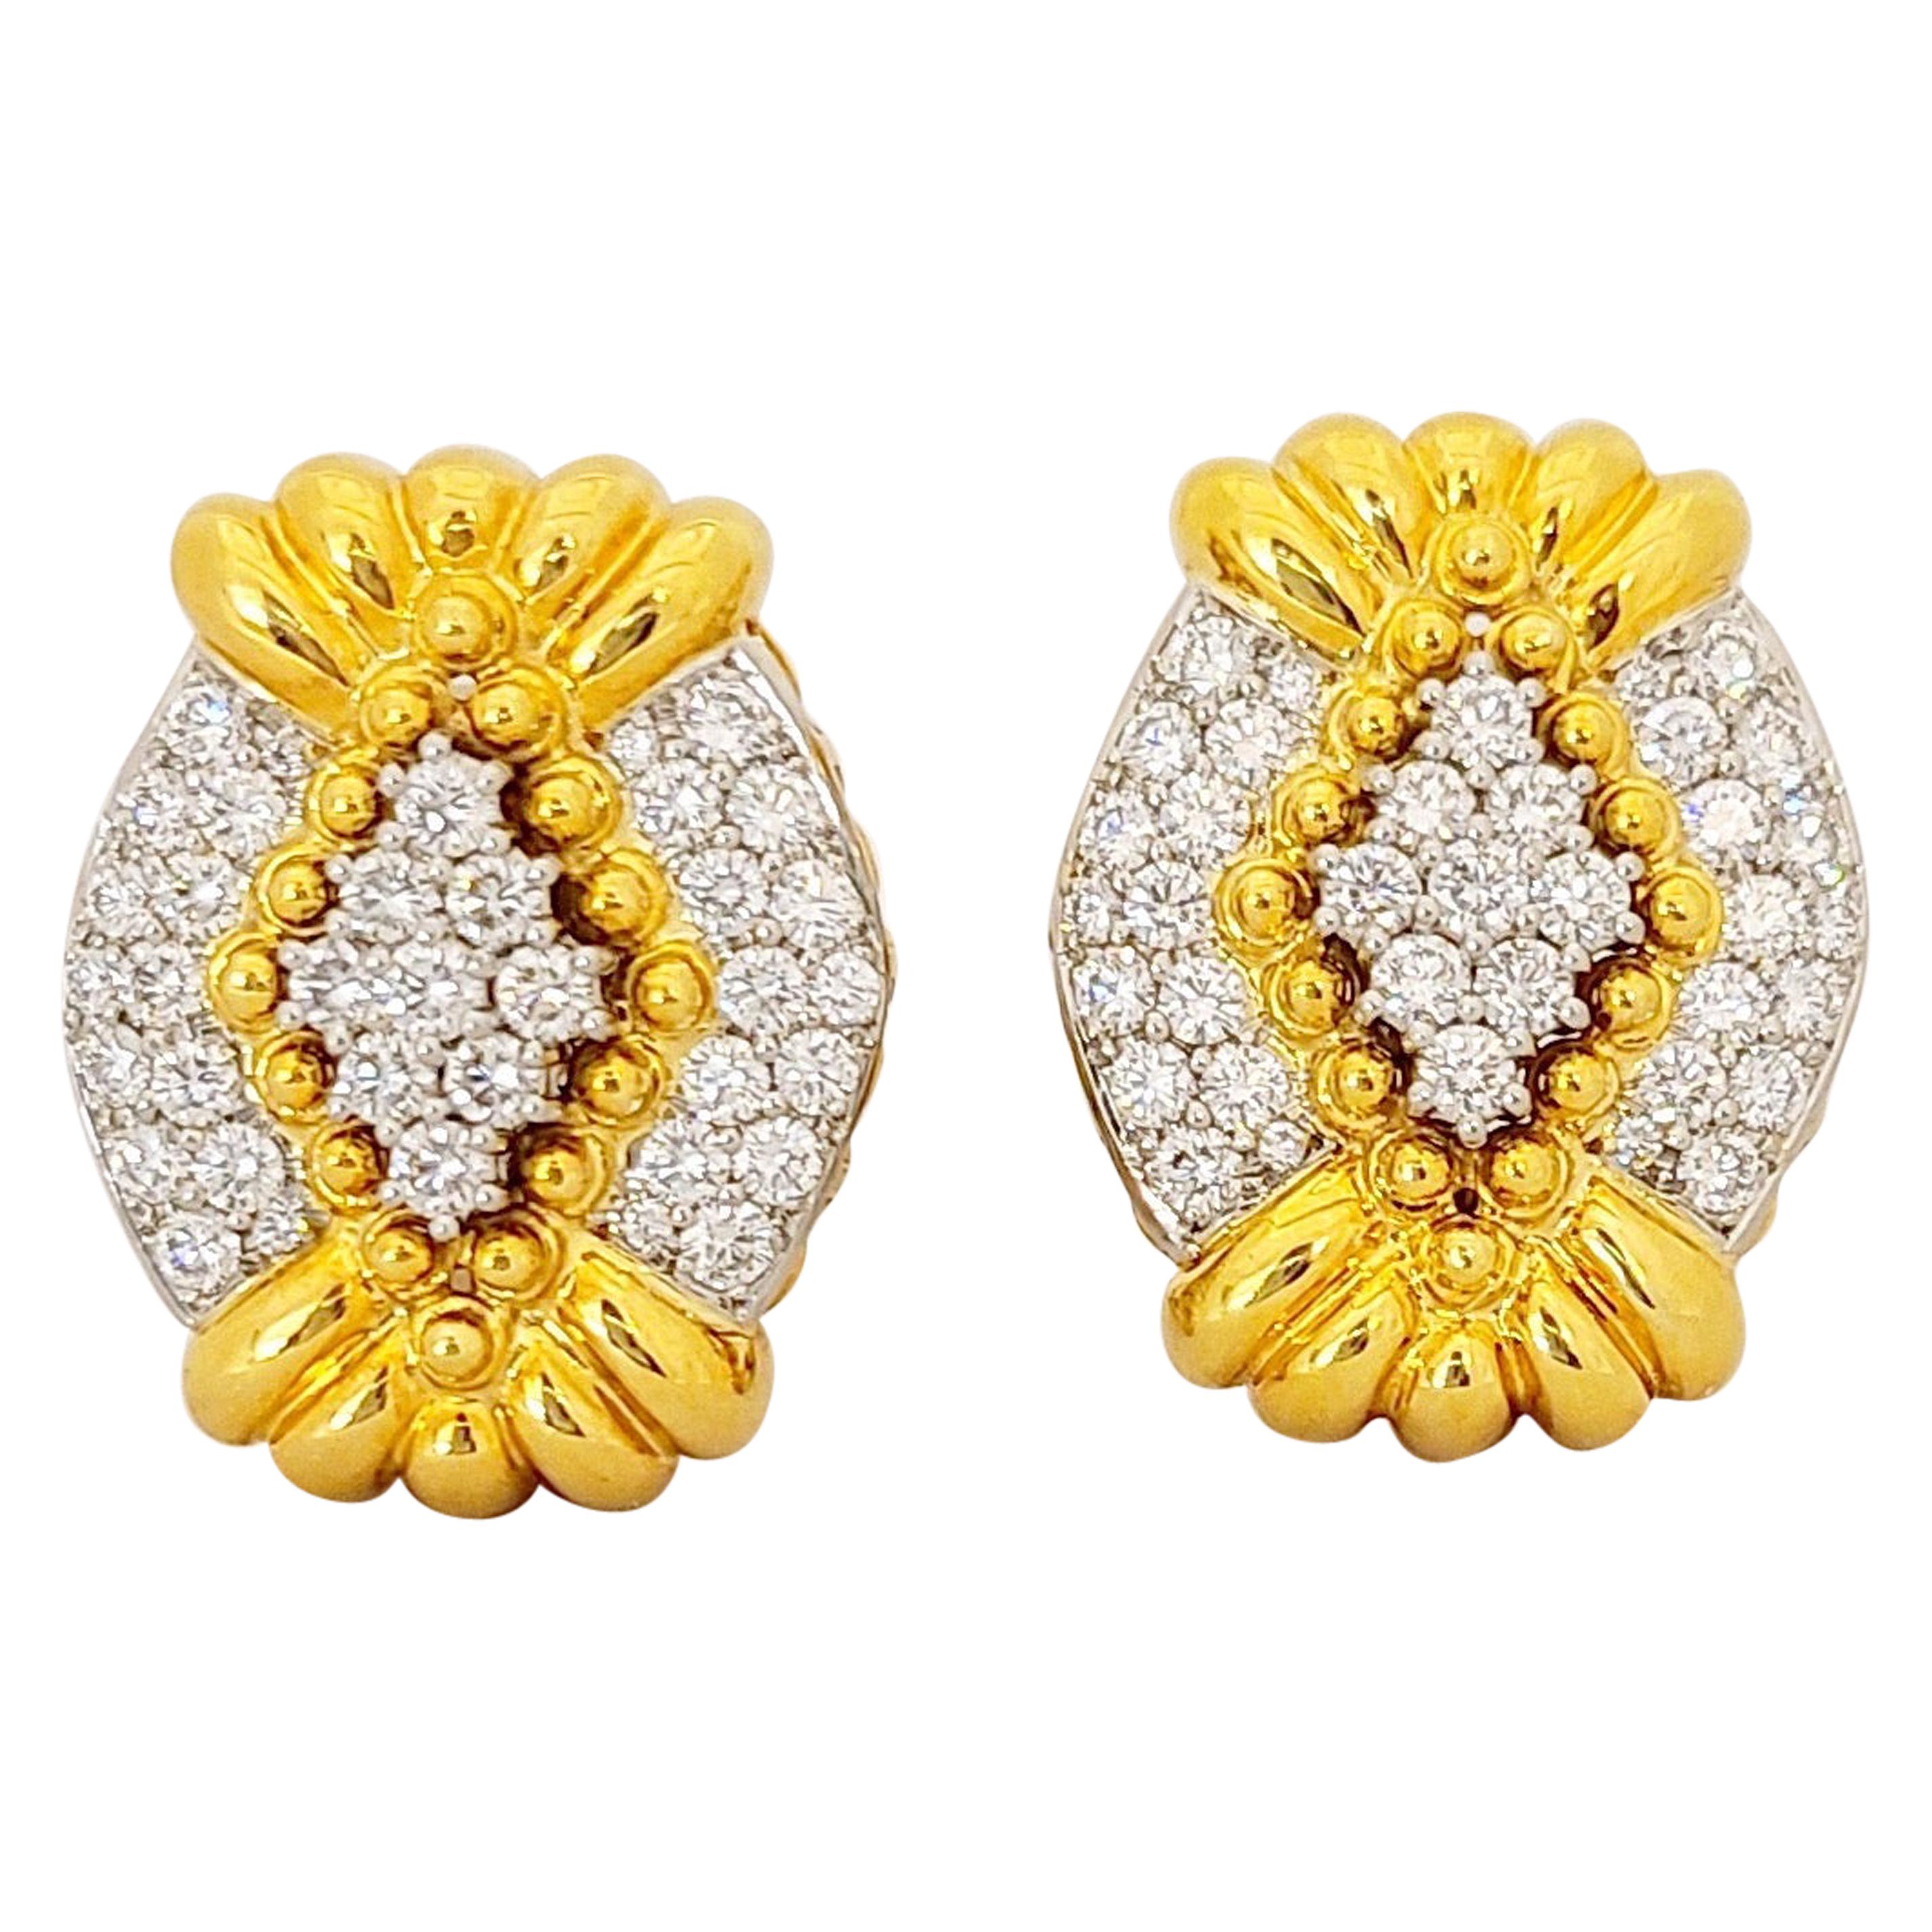 Chaavae 18 Karat Gold and Platinum, 3.50 Carat Diamonds Modified Oval Earrings